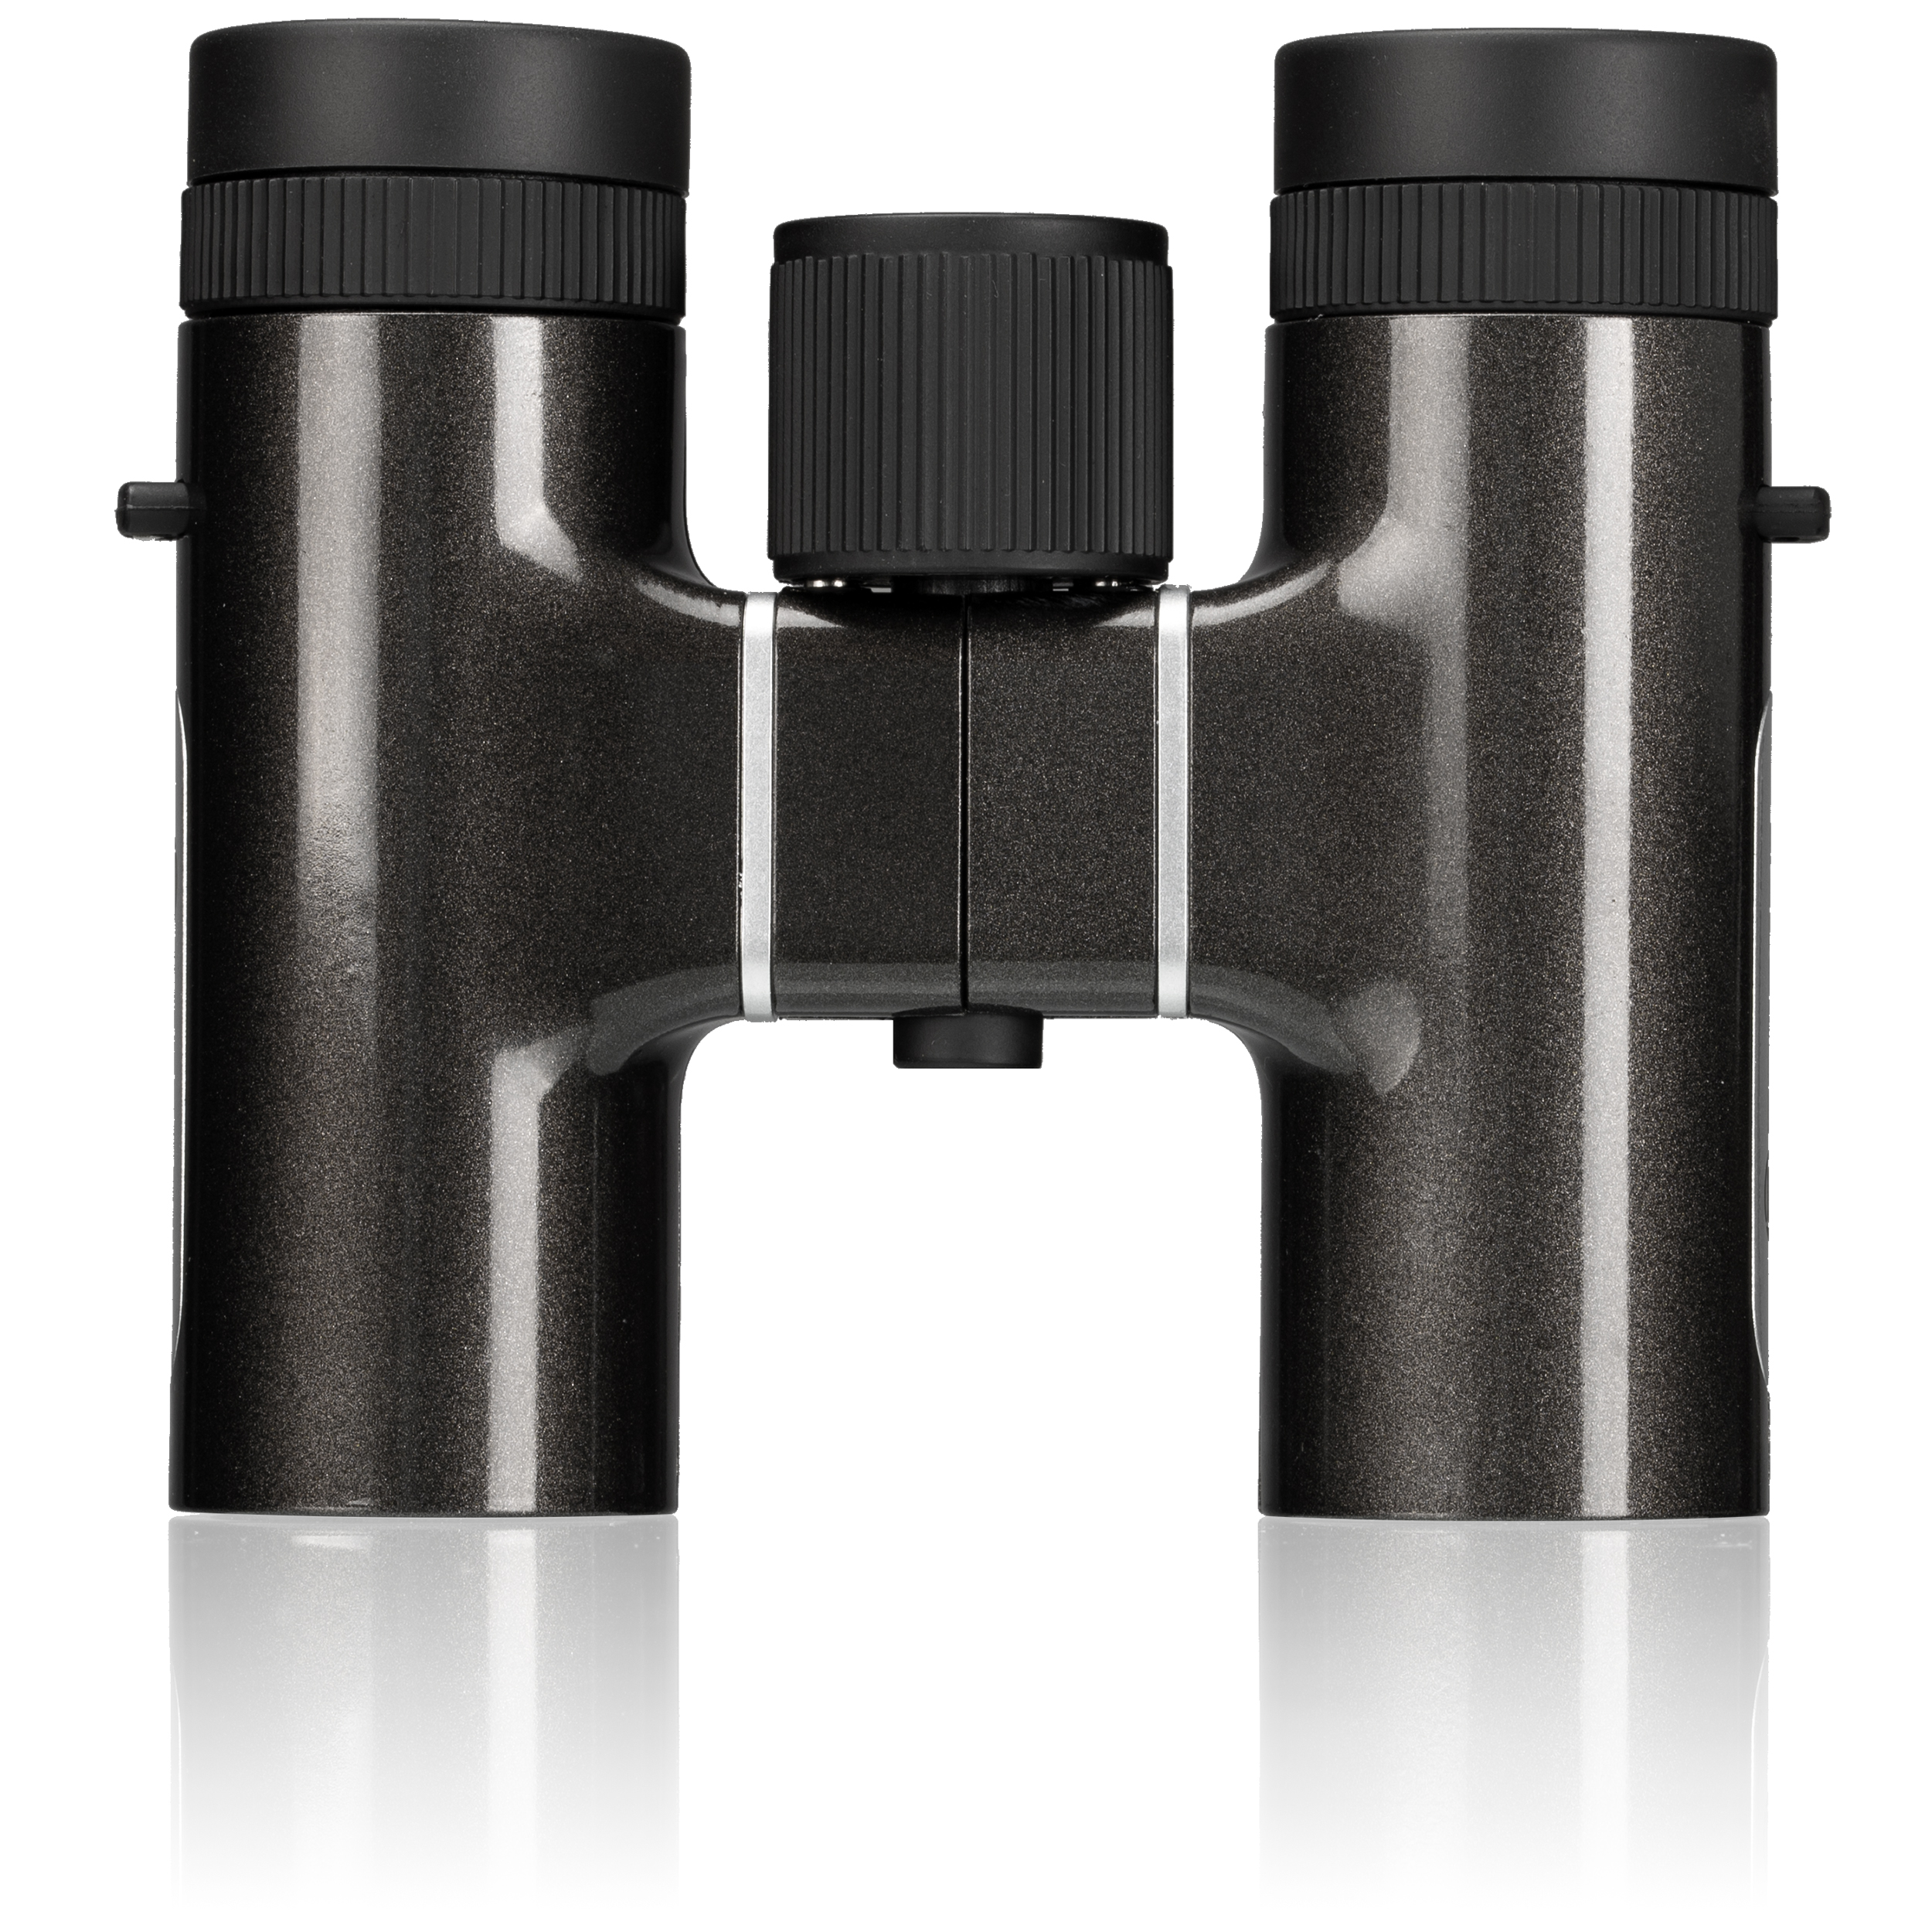 BRESSER Spirit Compact Binoculars 6x24 black